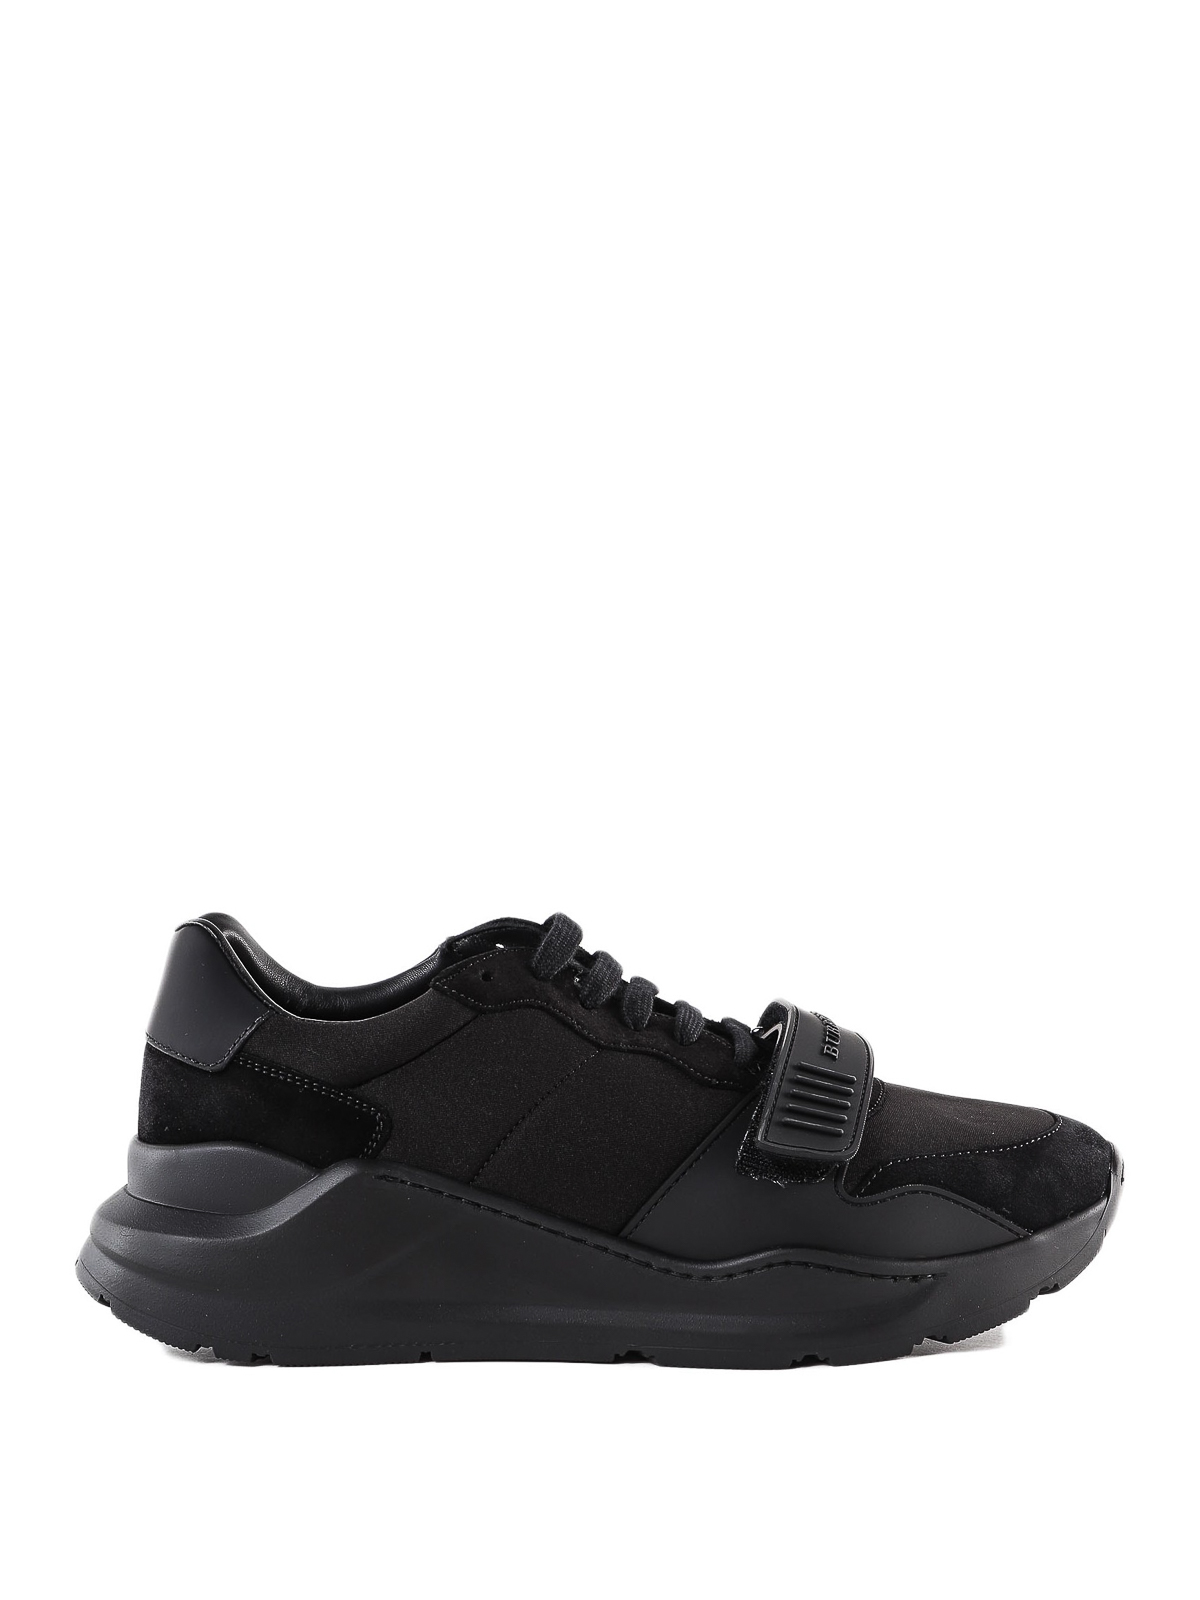 Burberry - Regis black sneakers 